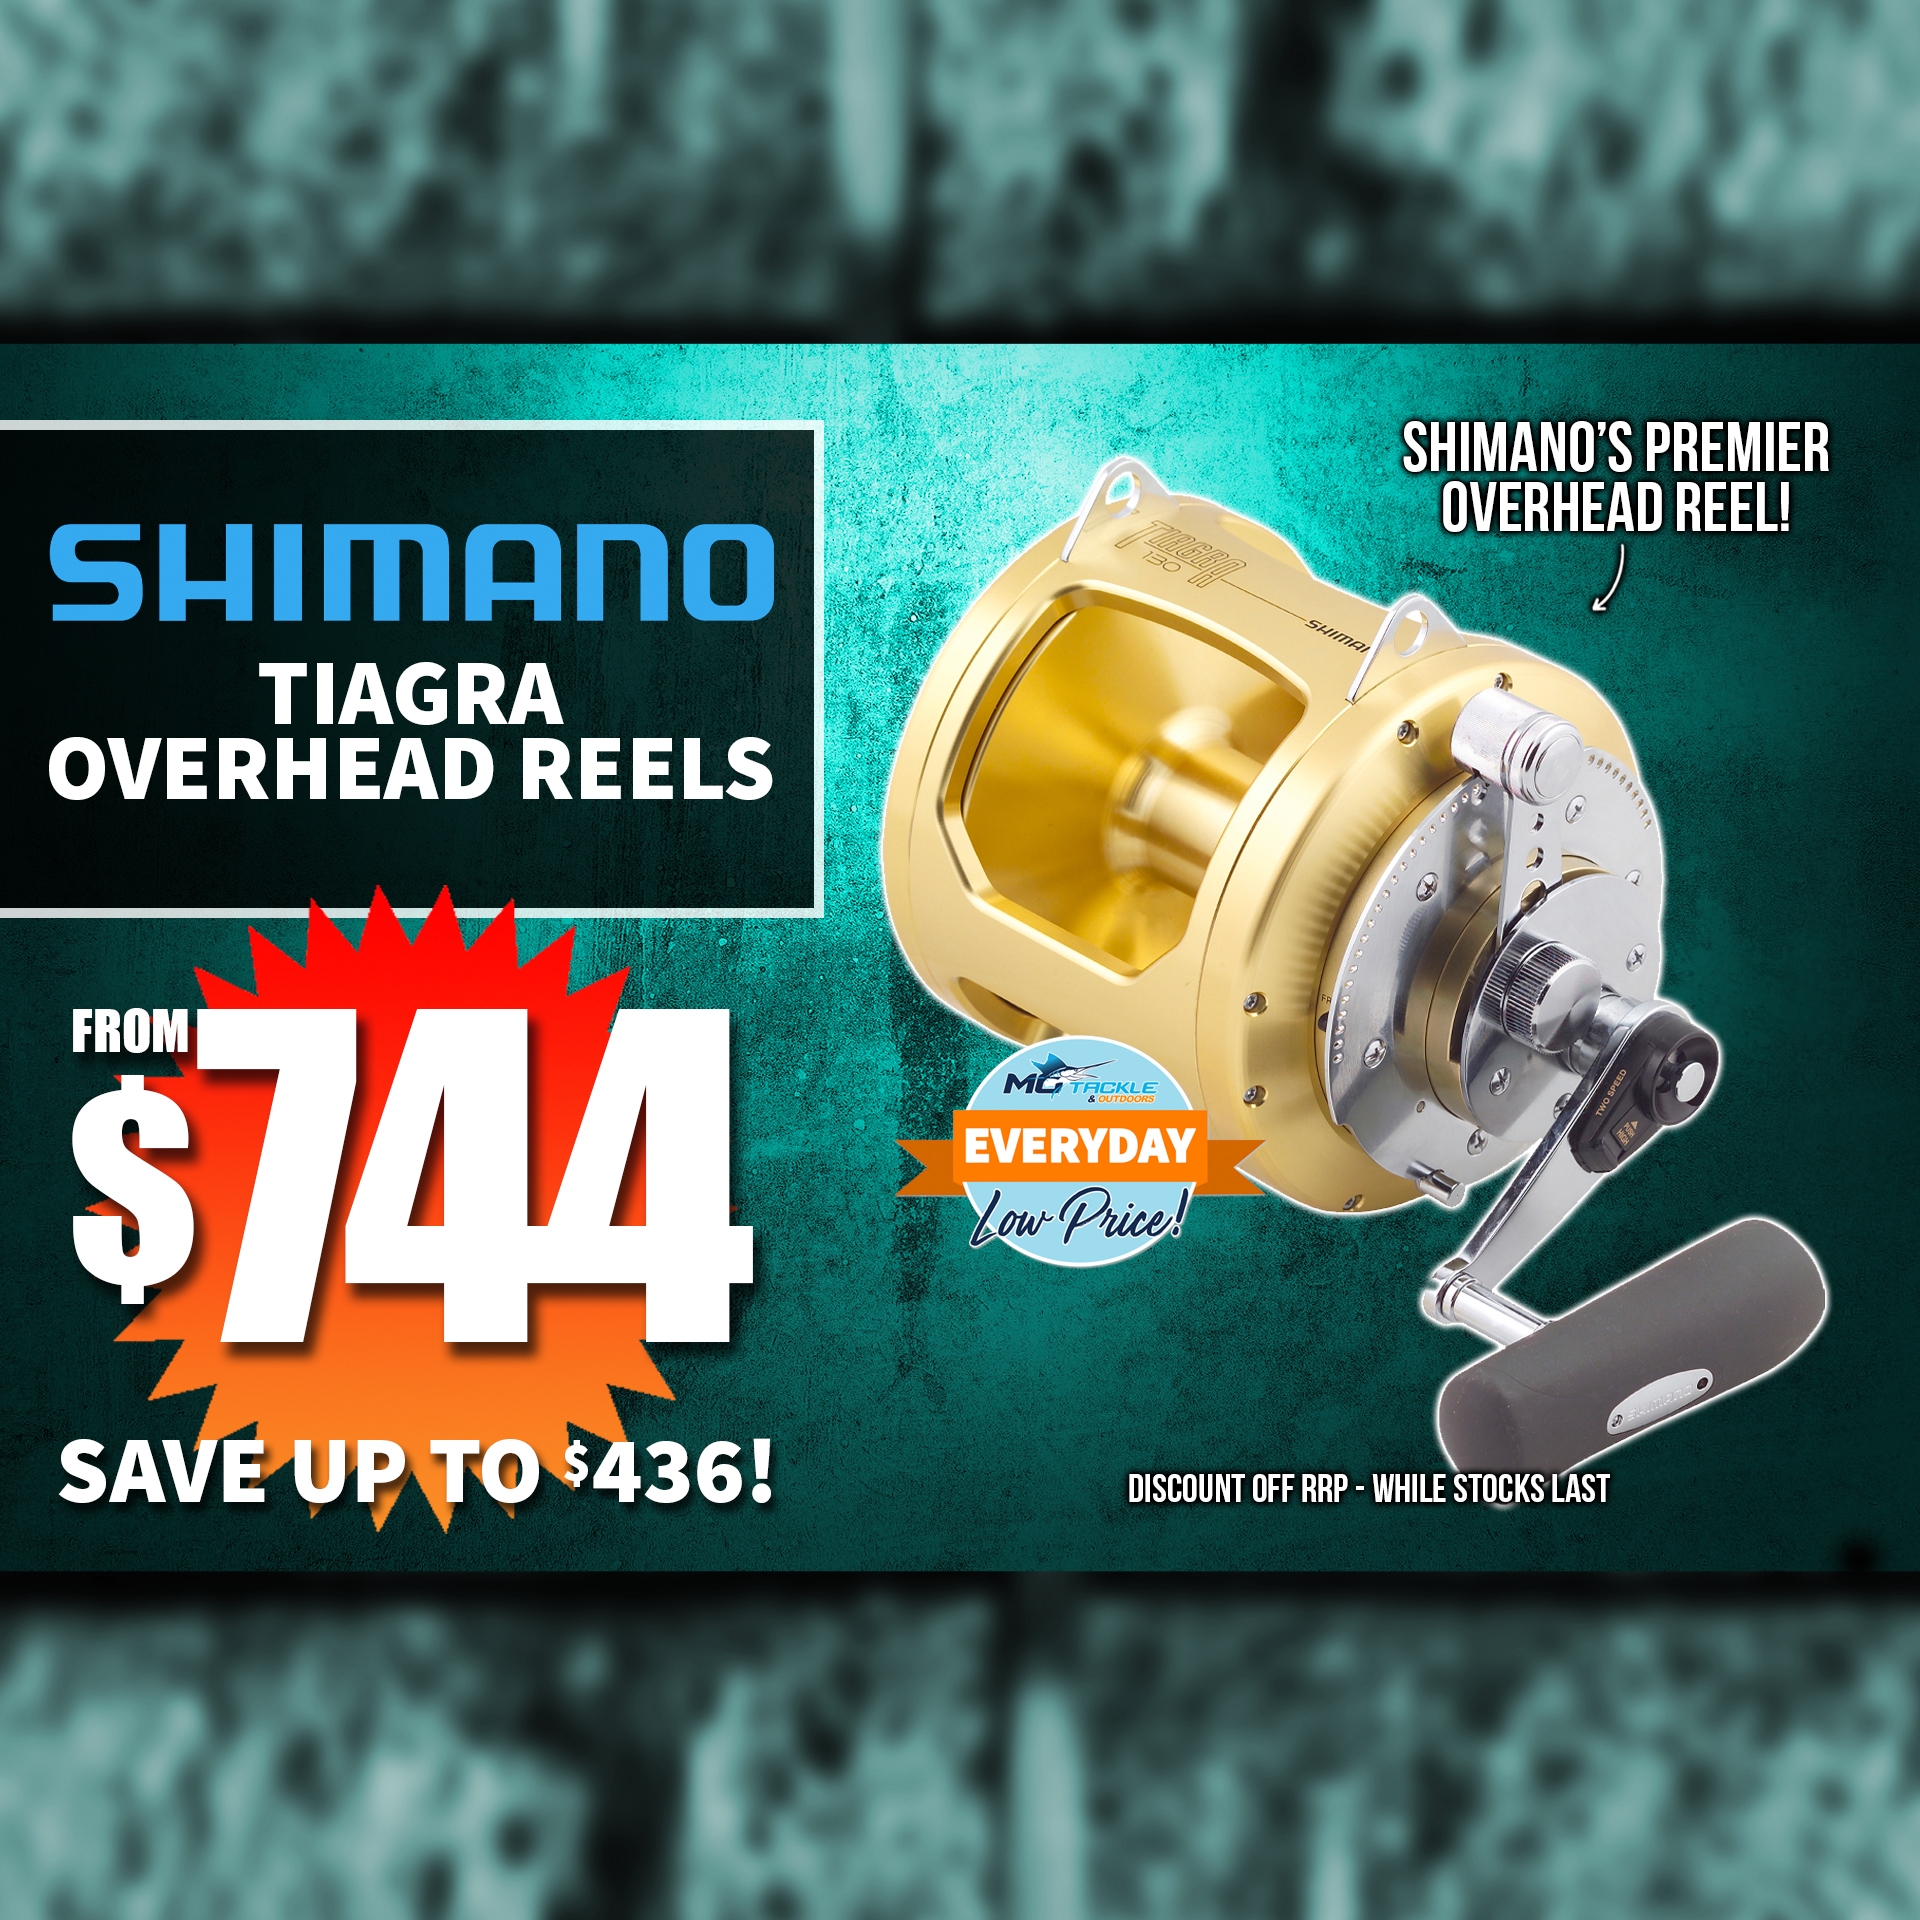 SHIMANO TIAGRA OVERHEAD REEL from $744